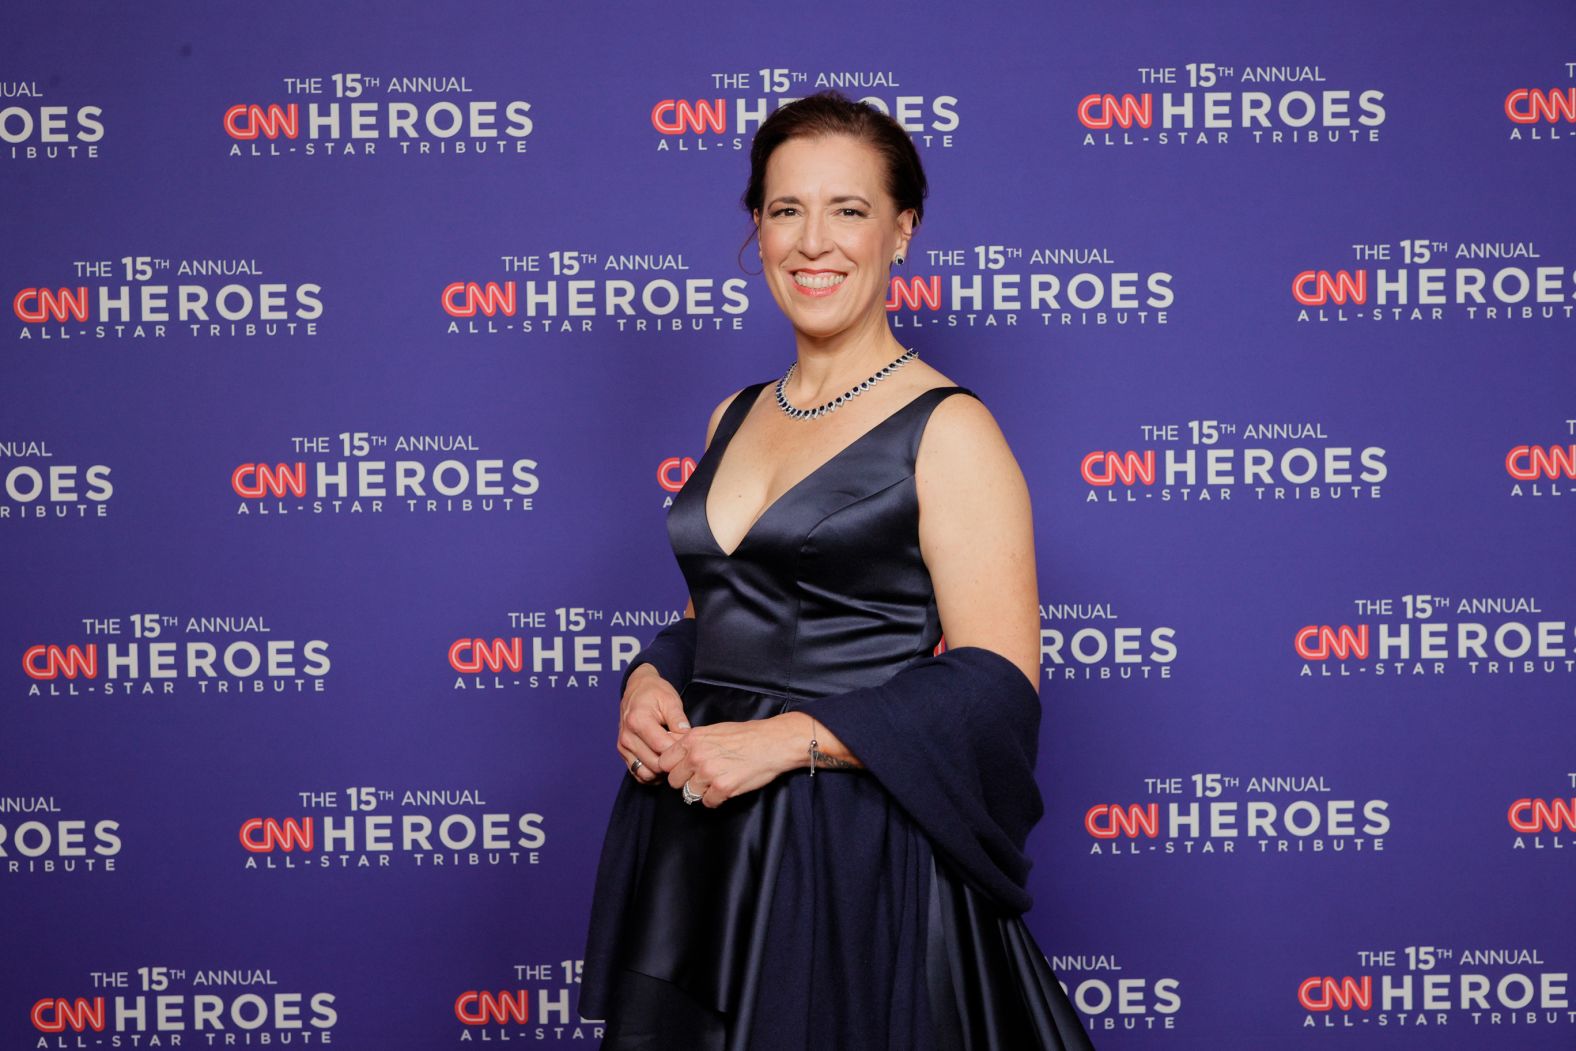 2021 <a href="index.php?page=&url=https%3A%2F%2Fwww.cnn.com%2F2021%2F08%2F12%2Fus%2Fwidows-grief-soaring-spirits-cnnheroes%2Findex.html" target="_blank">CNN Hero Michele Neff Hernandez</a> attends The 15th Annual 'CNN Heroes: All-Star Tribute' red carpet. 